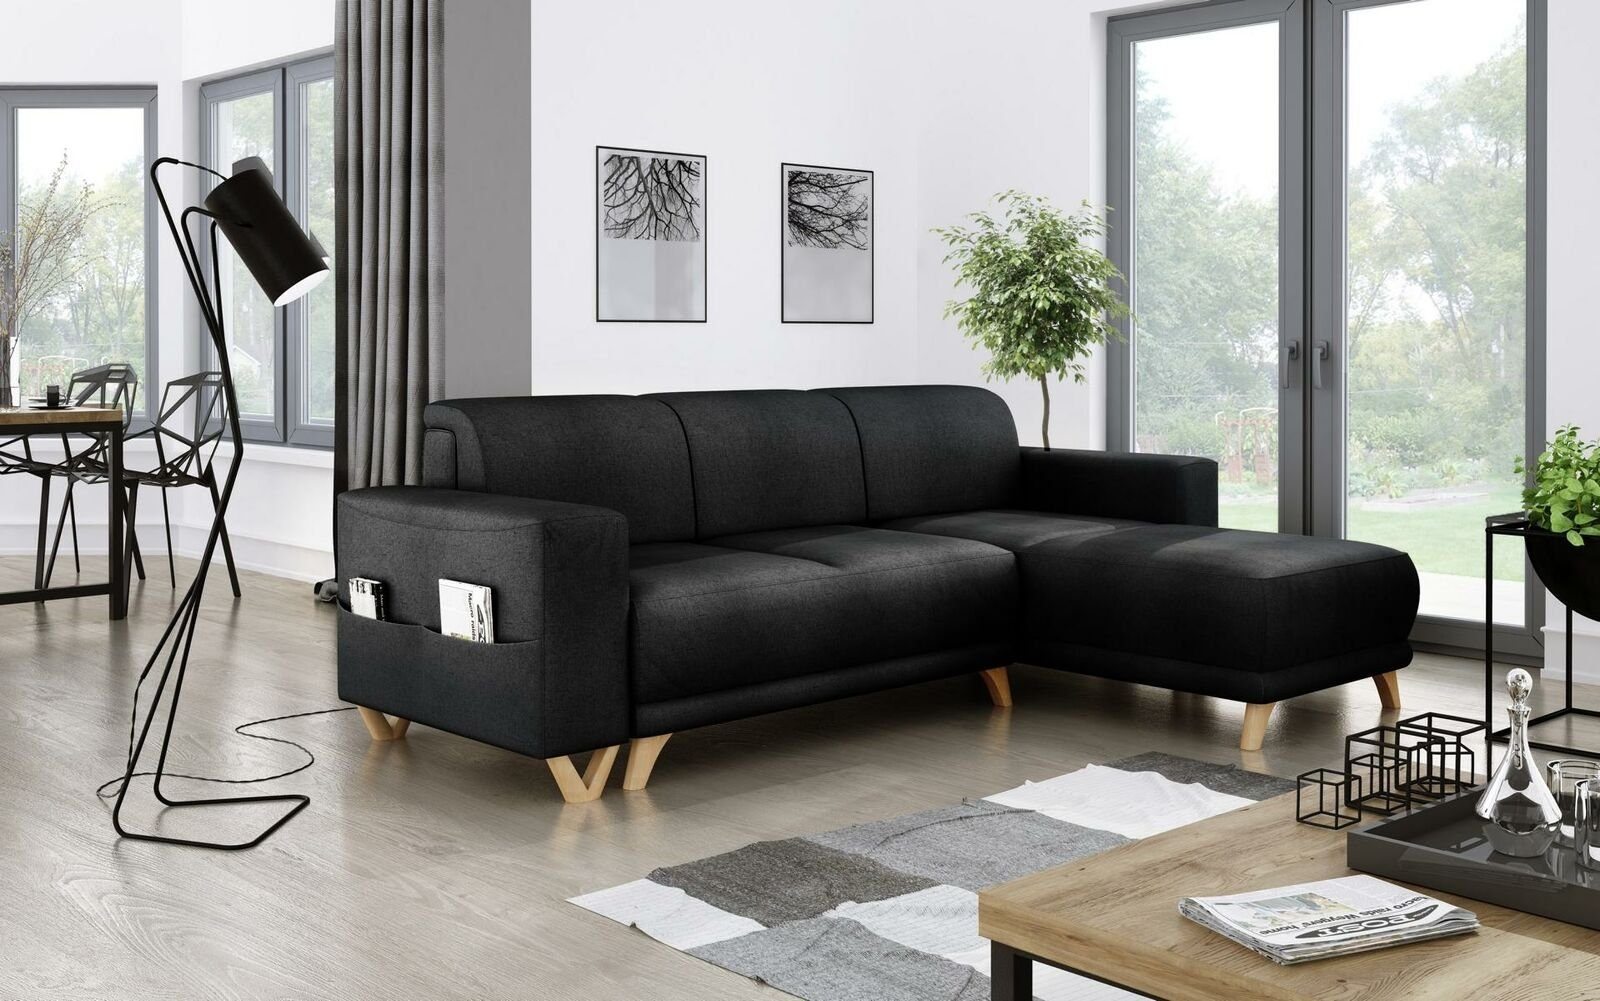 JVmoebel Sofa Design Ecksofa L-Form Schlafsofa Polster Mit Schwarz Bettfunkt, Couch Textil Sofa Bettfunktion